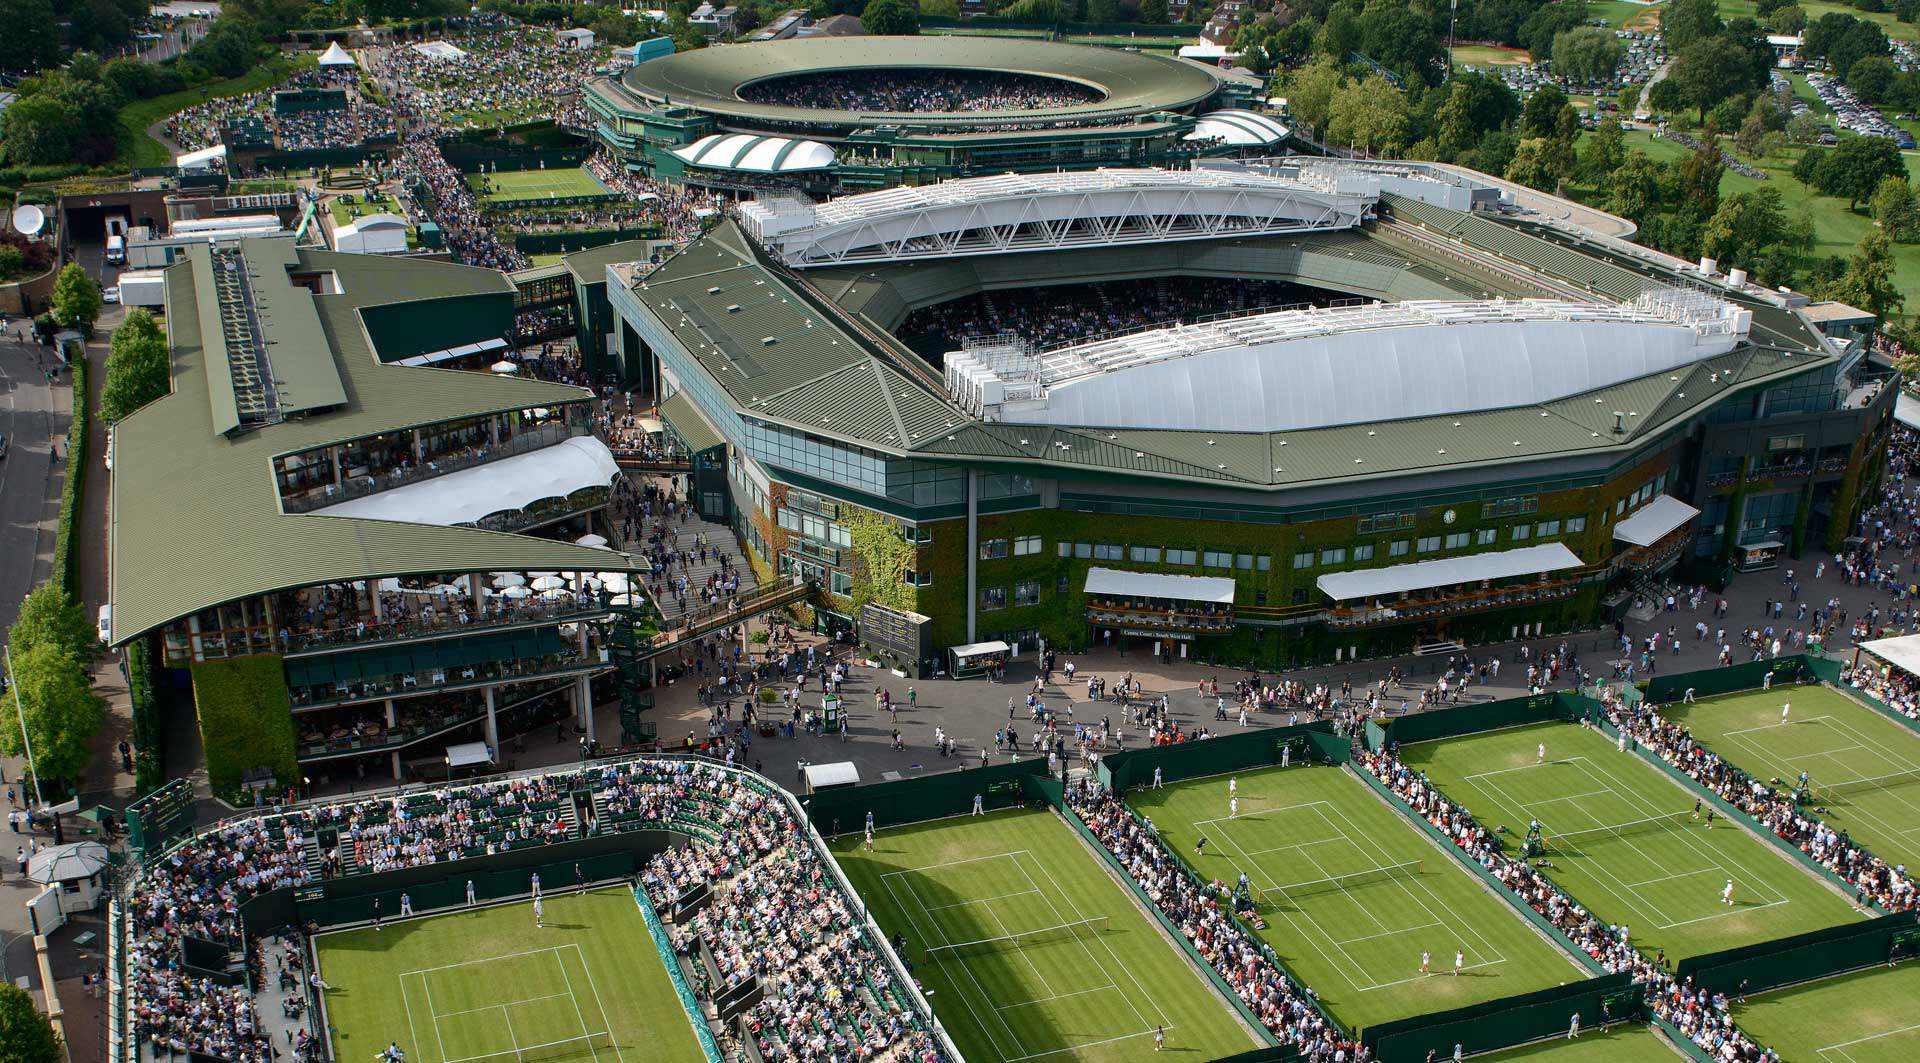 Wimbledon - Public Ballot - The Championships, Wimbledon - Official Site by  IBM